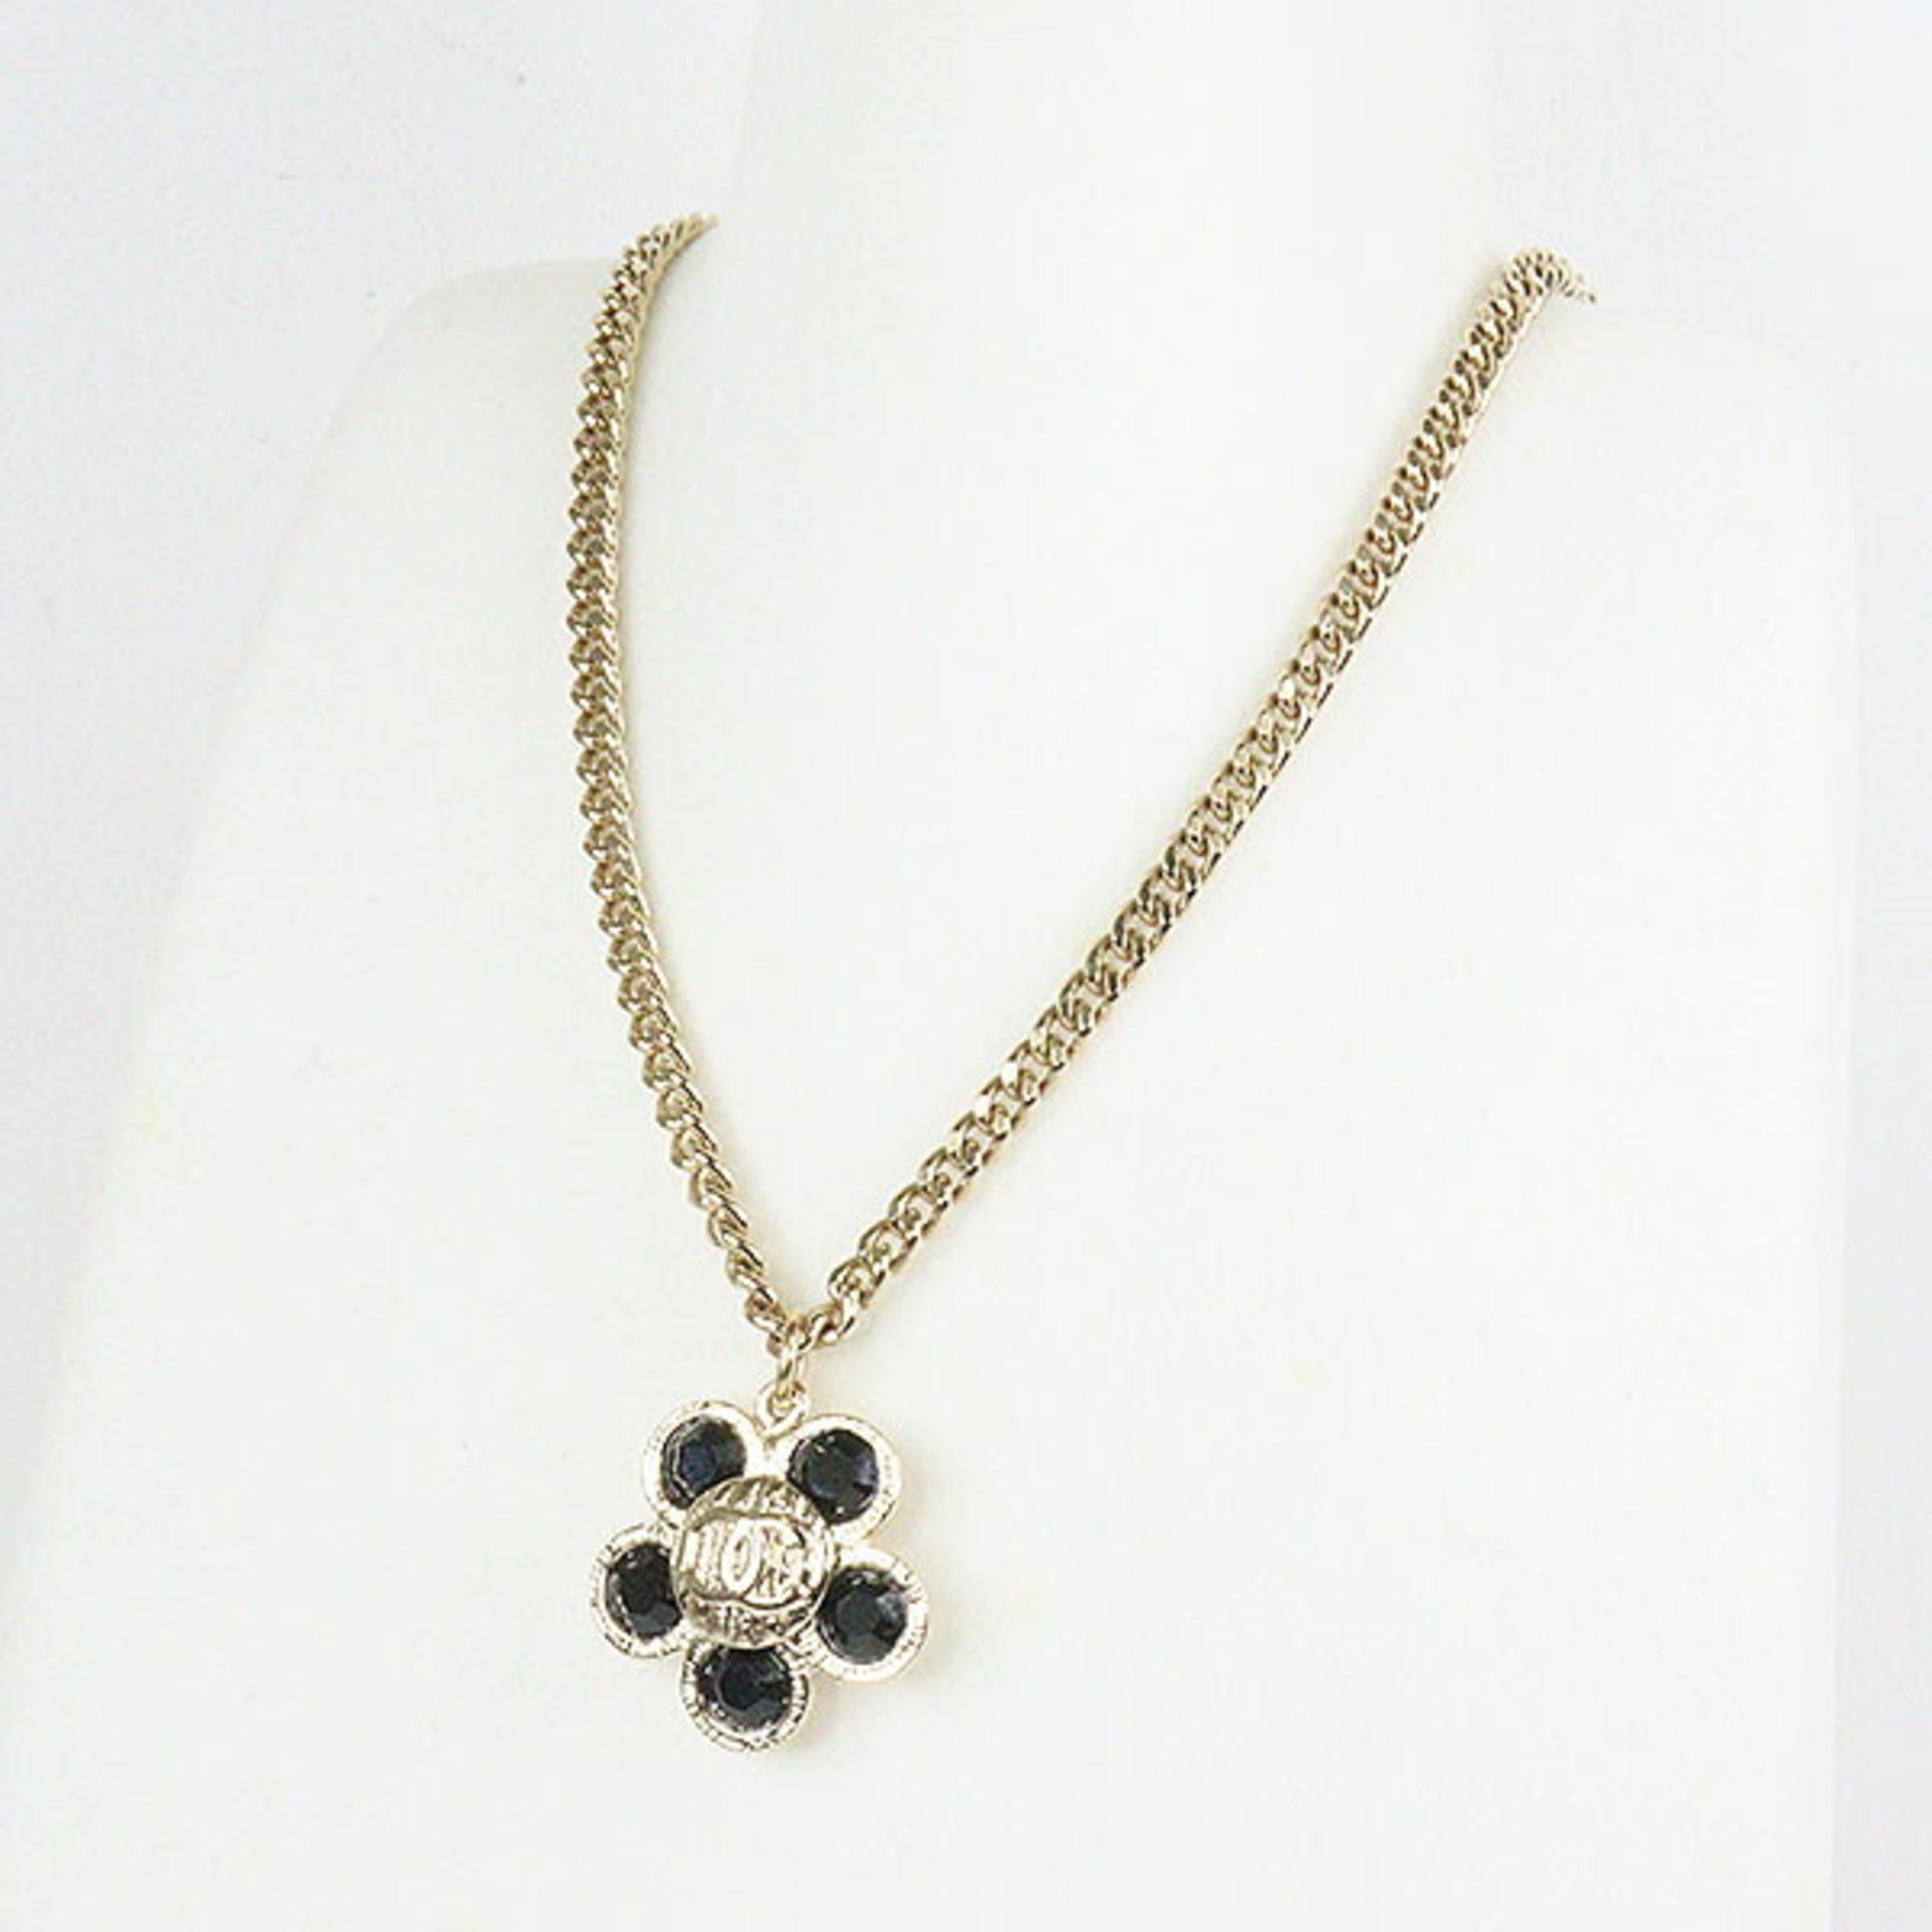 CHANEL camellia pendant necklace metal / black stone light gold 42cm 0